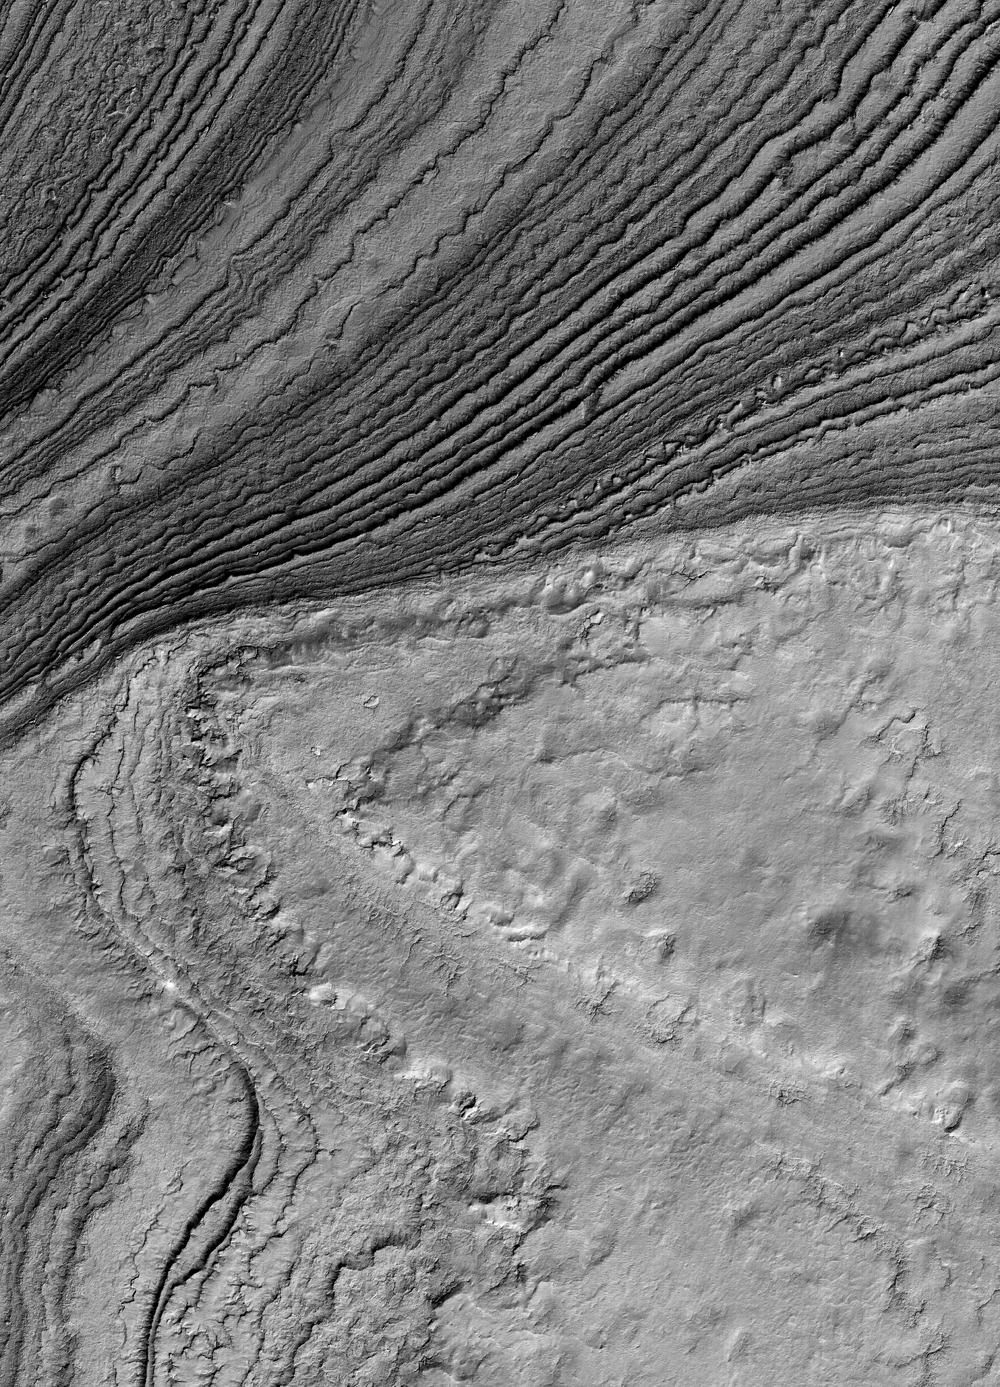 8 Incredible Images That Make Mars Look Like A Petri Dish